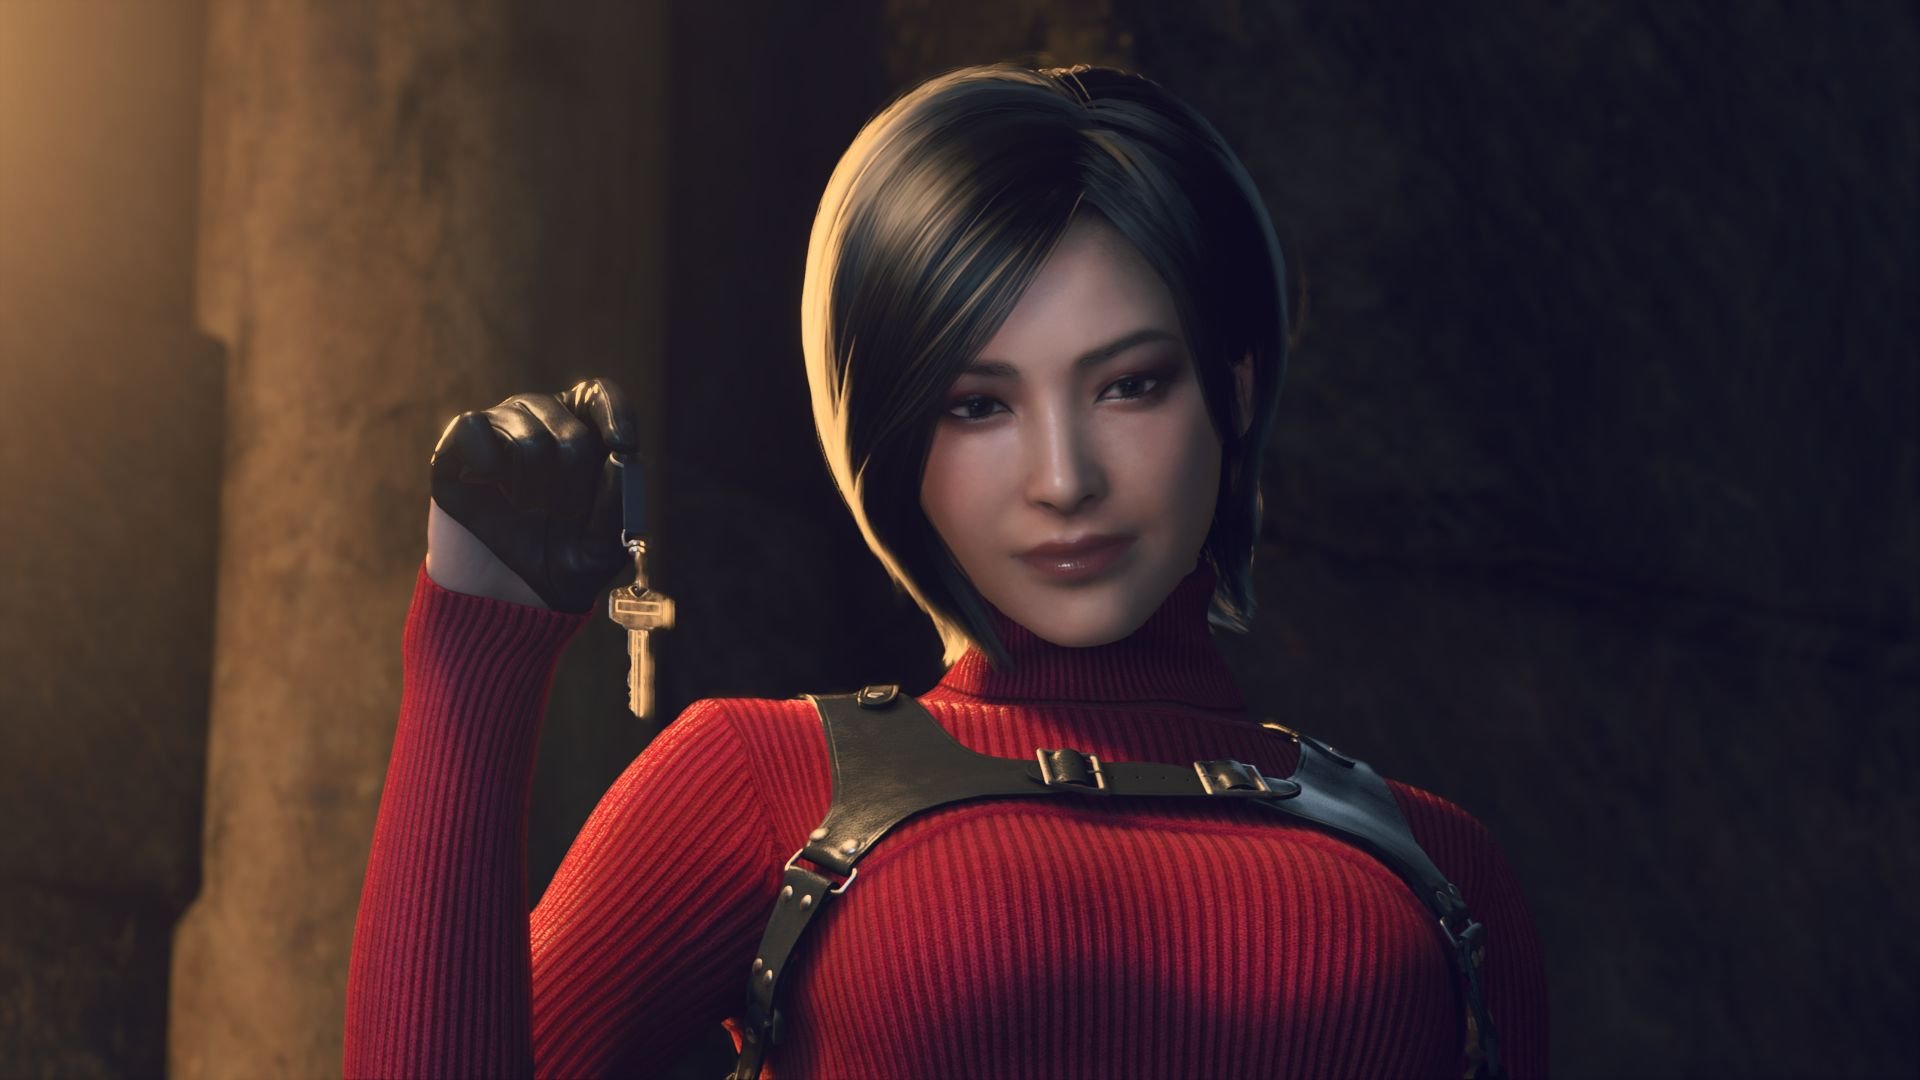 Shinji Mikami Hopes 'Resident Evil 4' Remake Improves Writing - Bloody  Disgusting